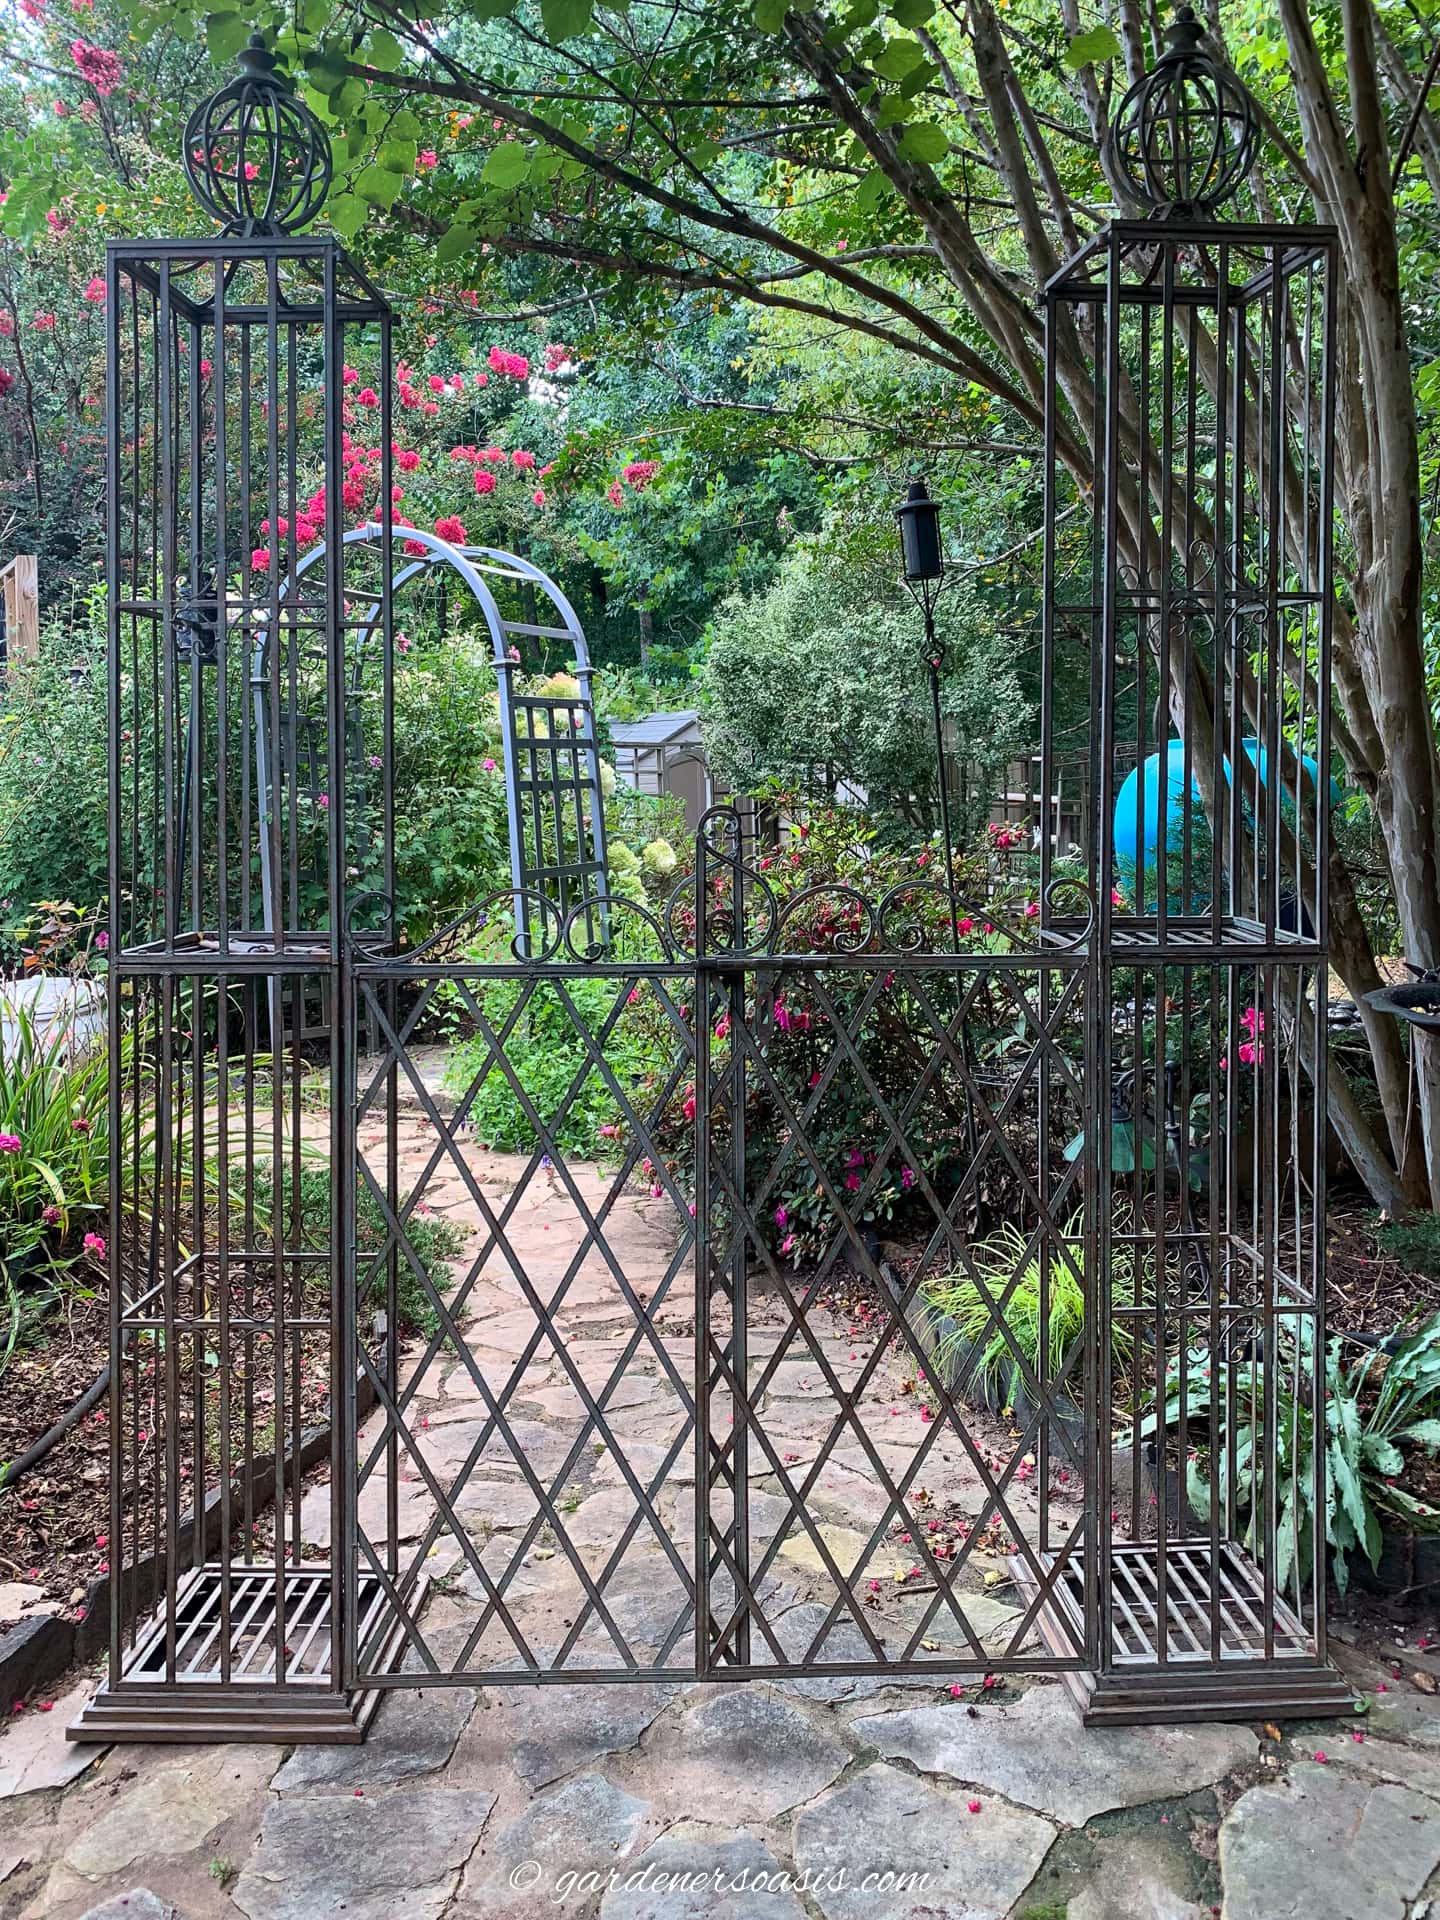 A metal gate in a garden.